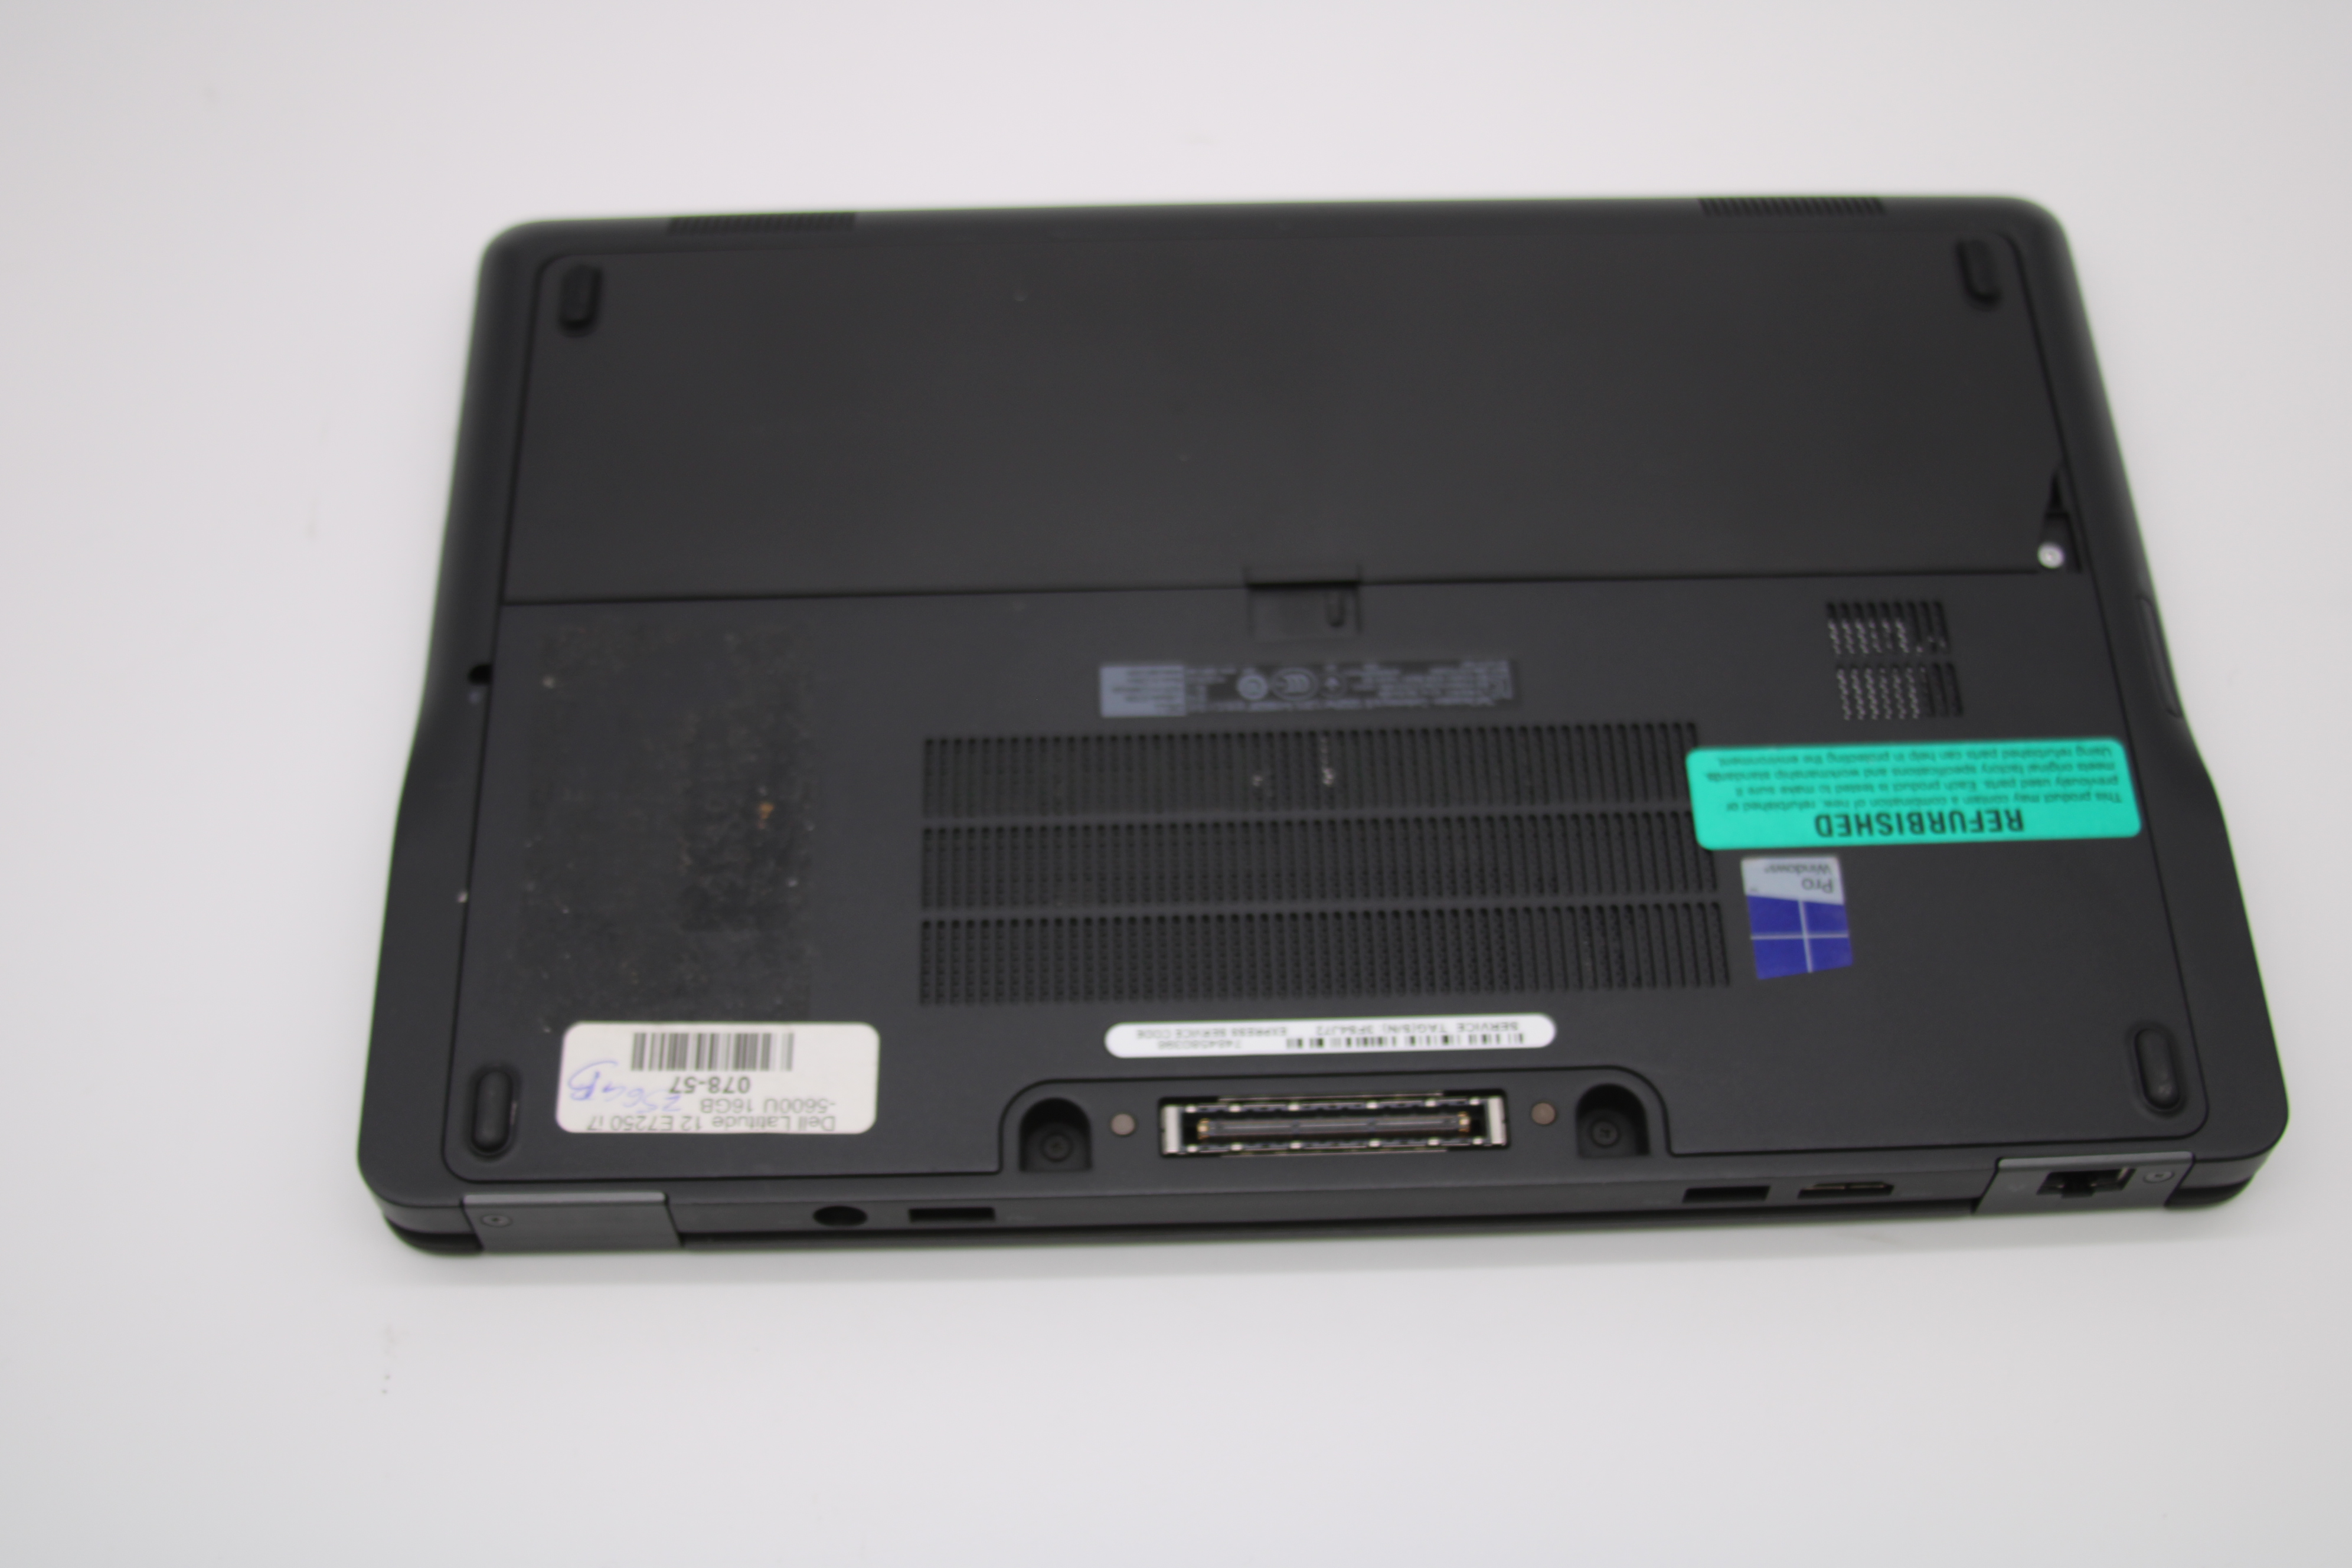 Dell Latitude 12 E7250 Laptop I7-5600U 2.6GHz 16GB RAM 256GB SSD